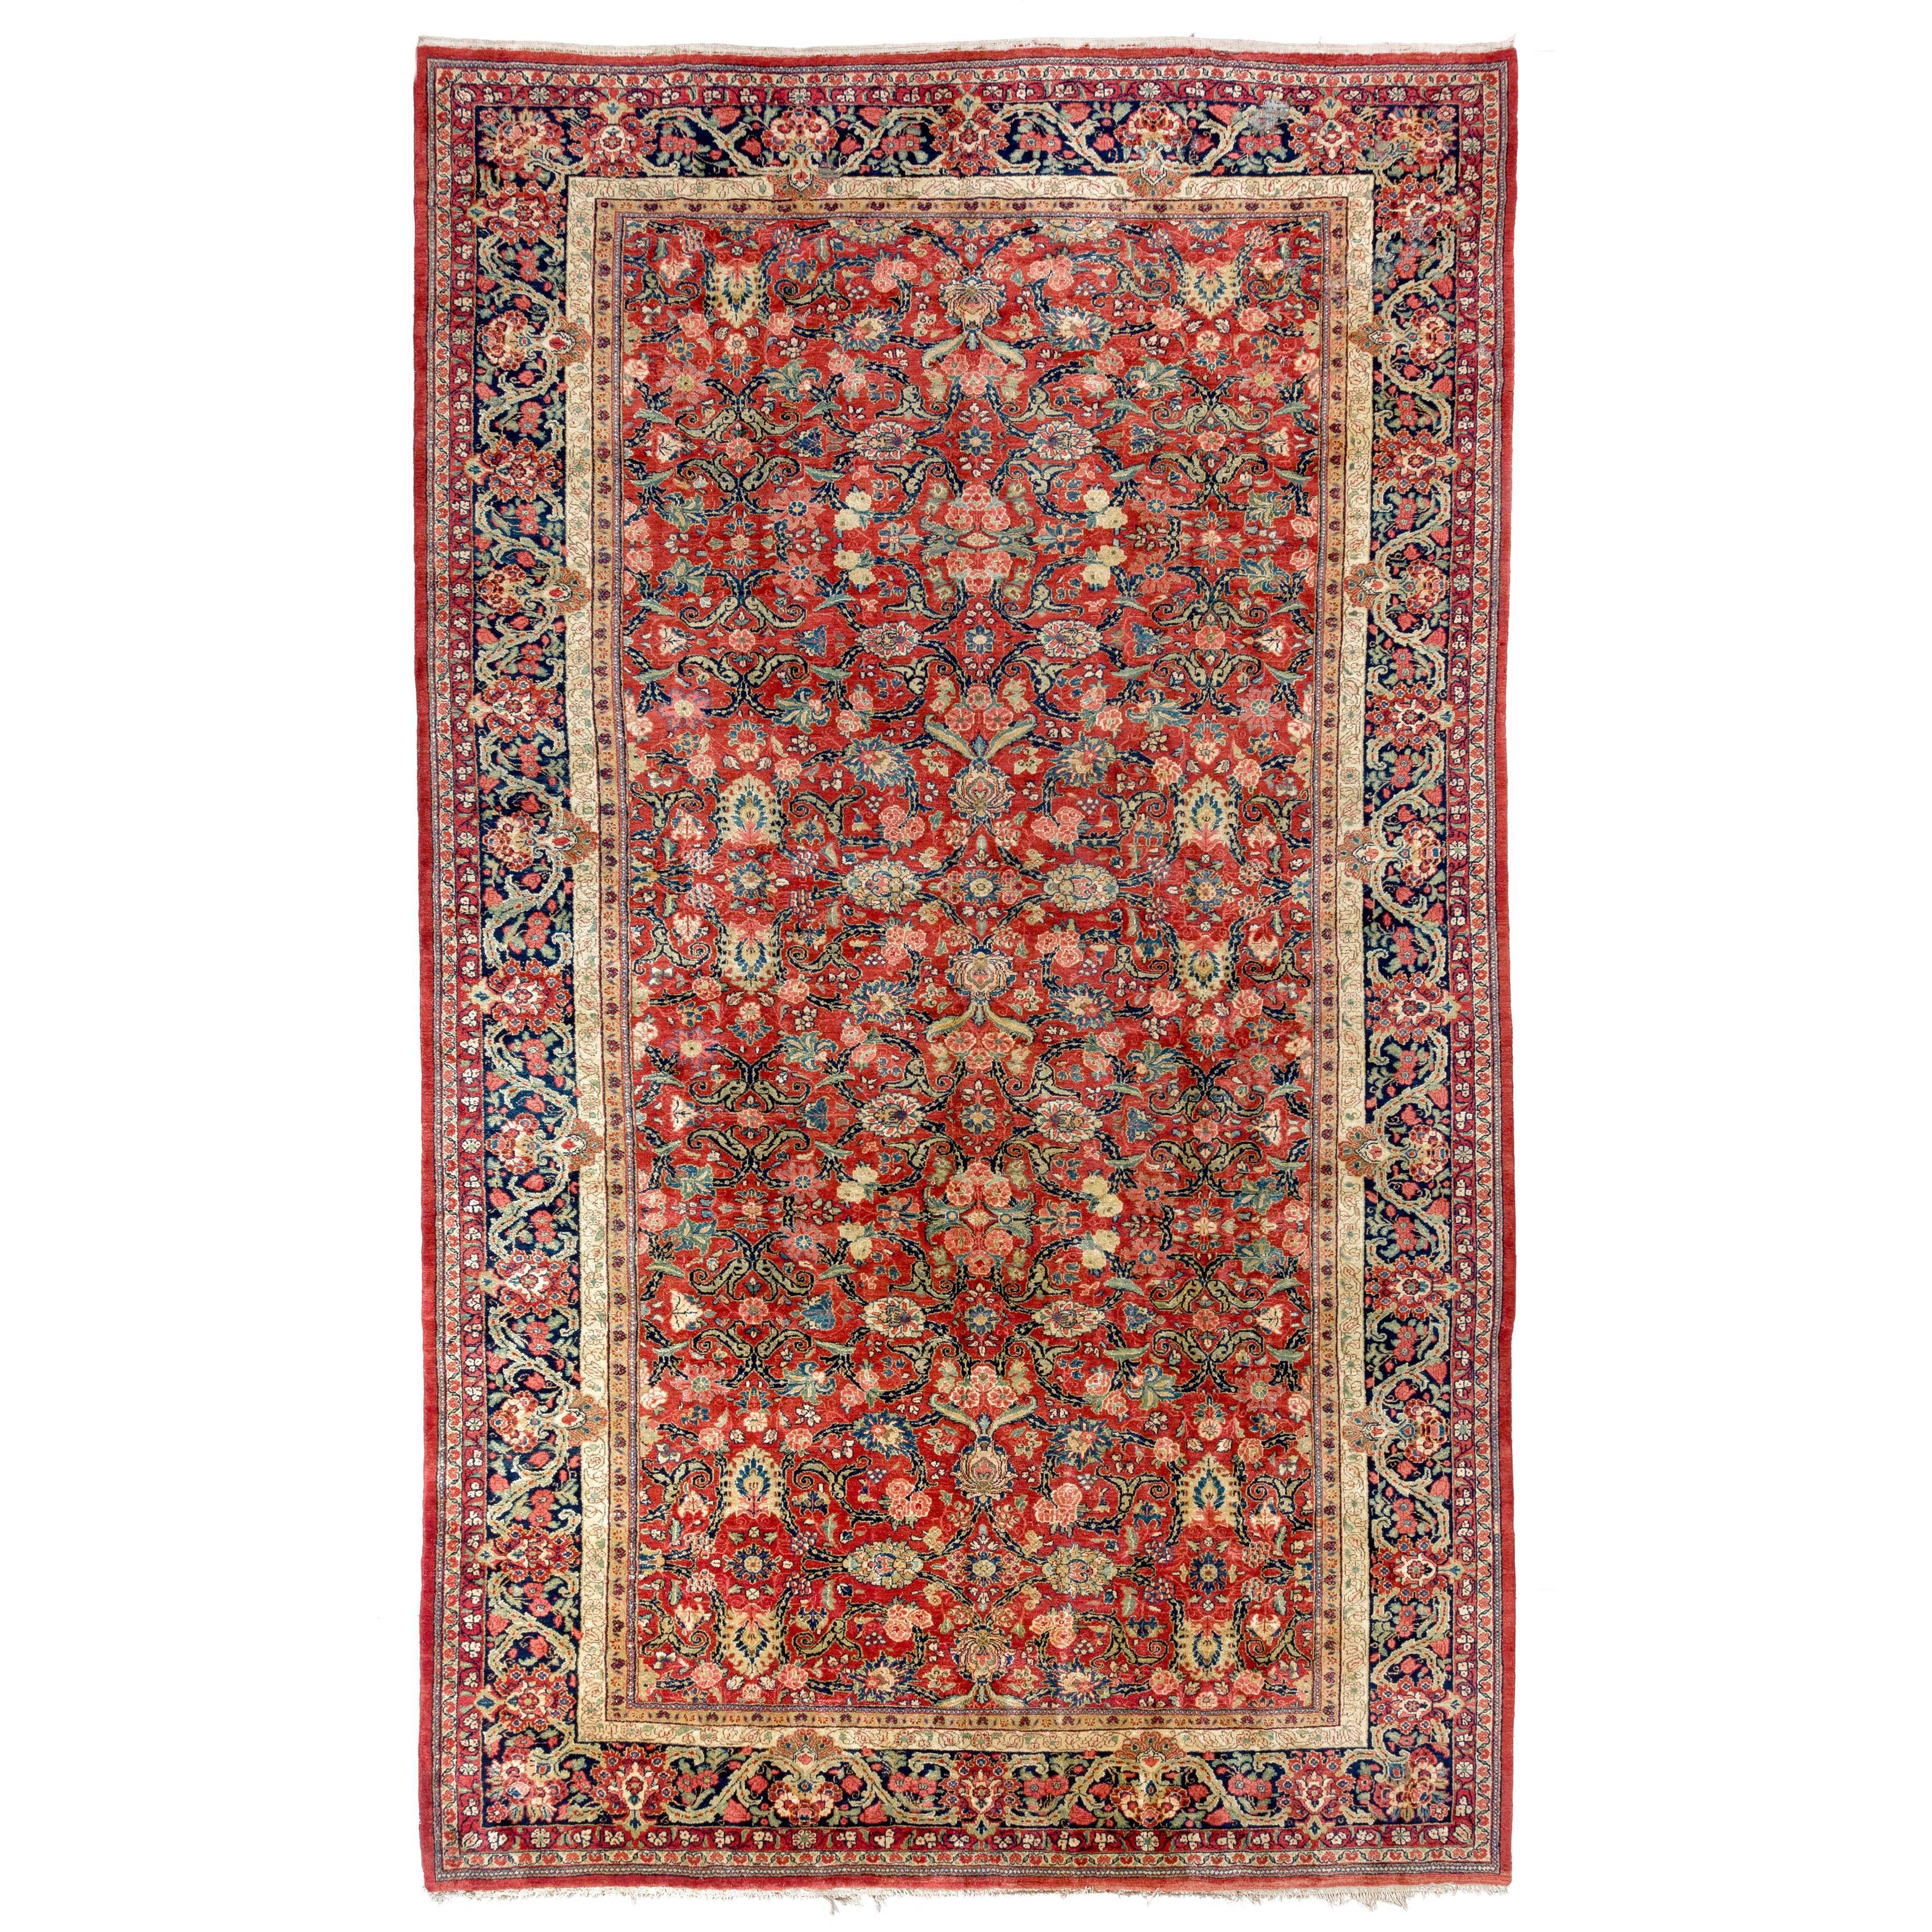 11 x 18.4 Ft Antique Persian Mahal Carpet, late 19th Century.